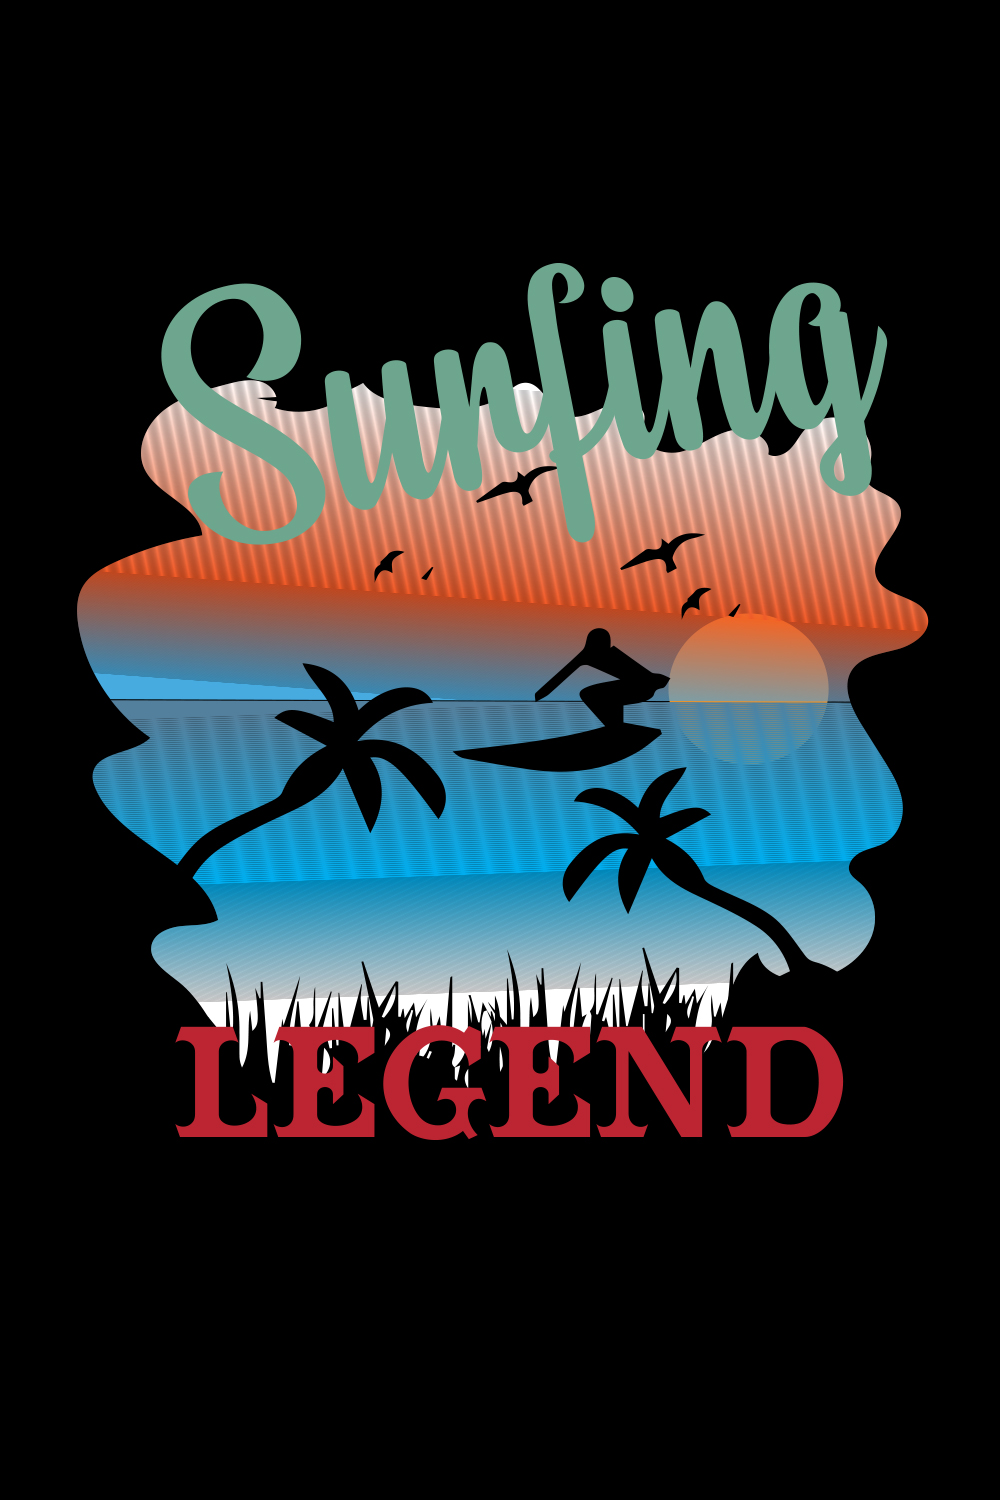 Surfing legend pinterest preview image.